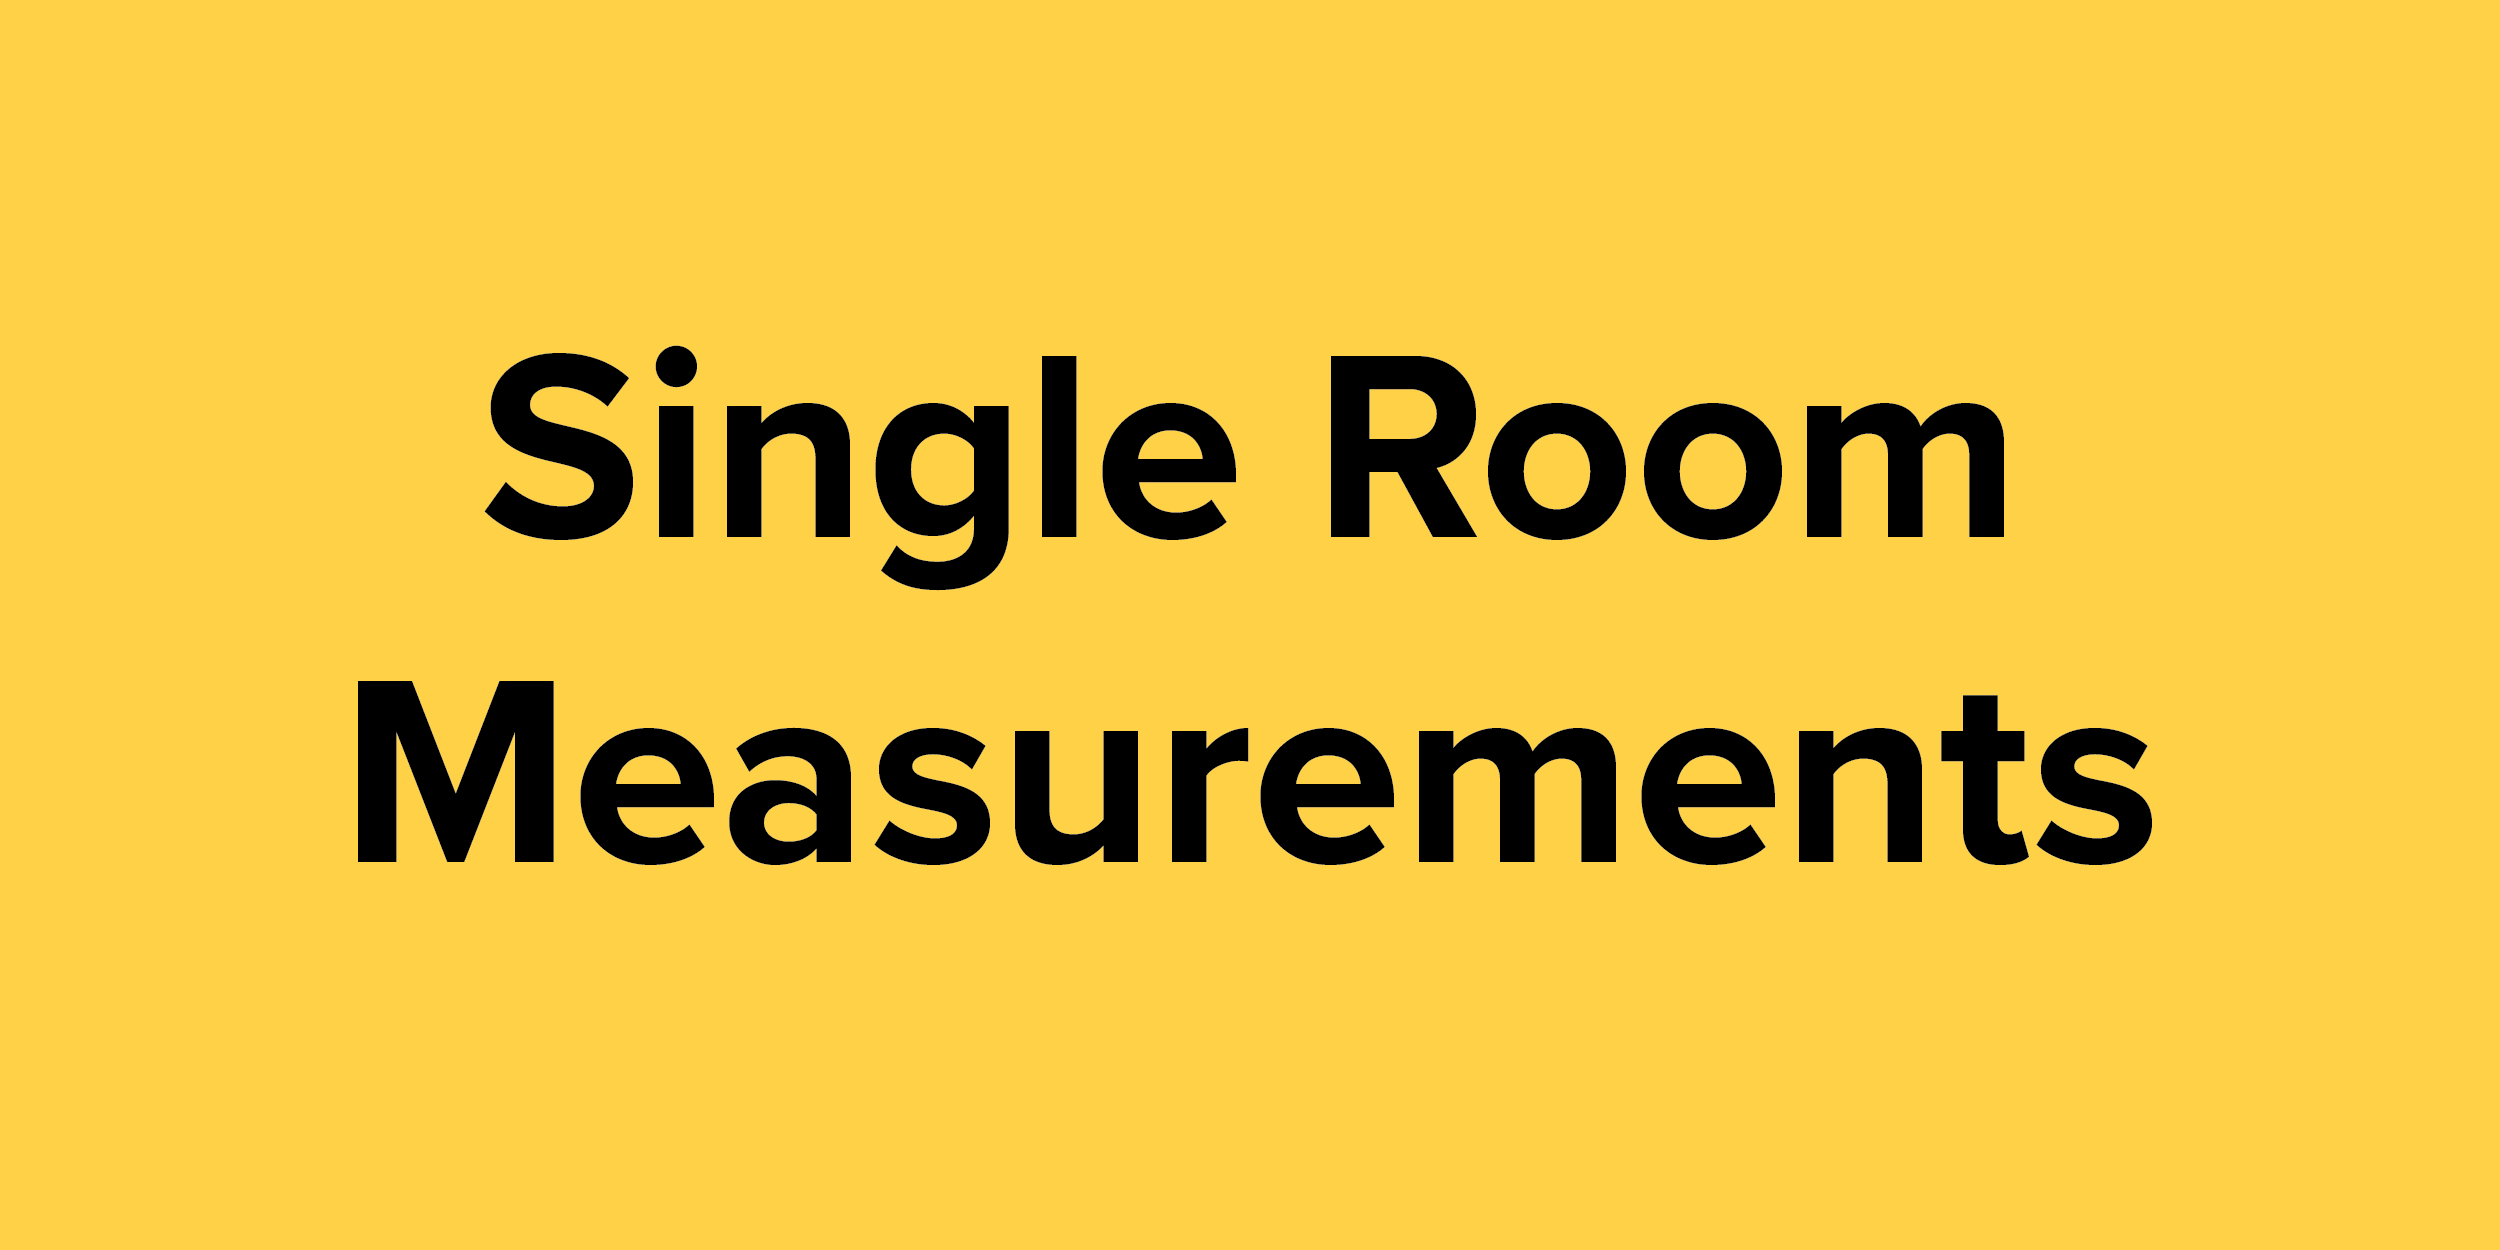 Single Room Measurements